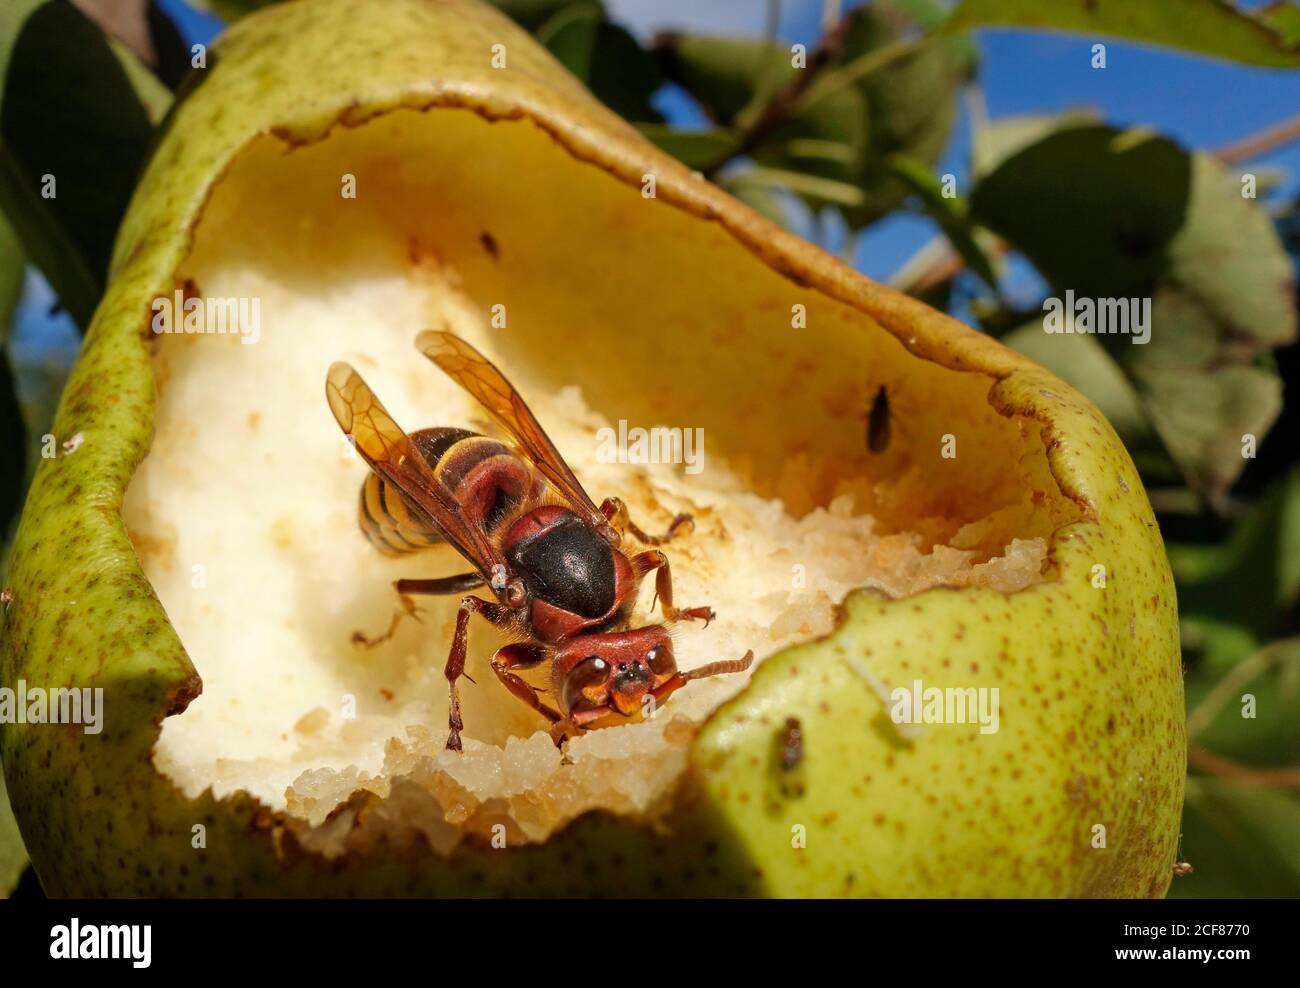 European hornet (vespa Crabro) feeding on the ripe pear fruit. Stock Photo